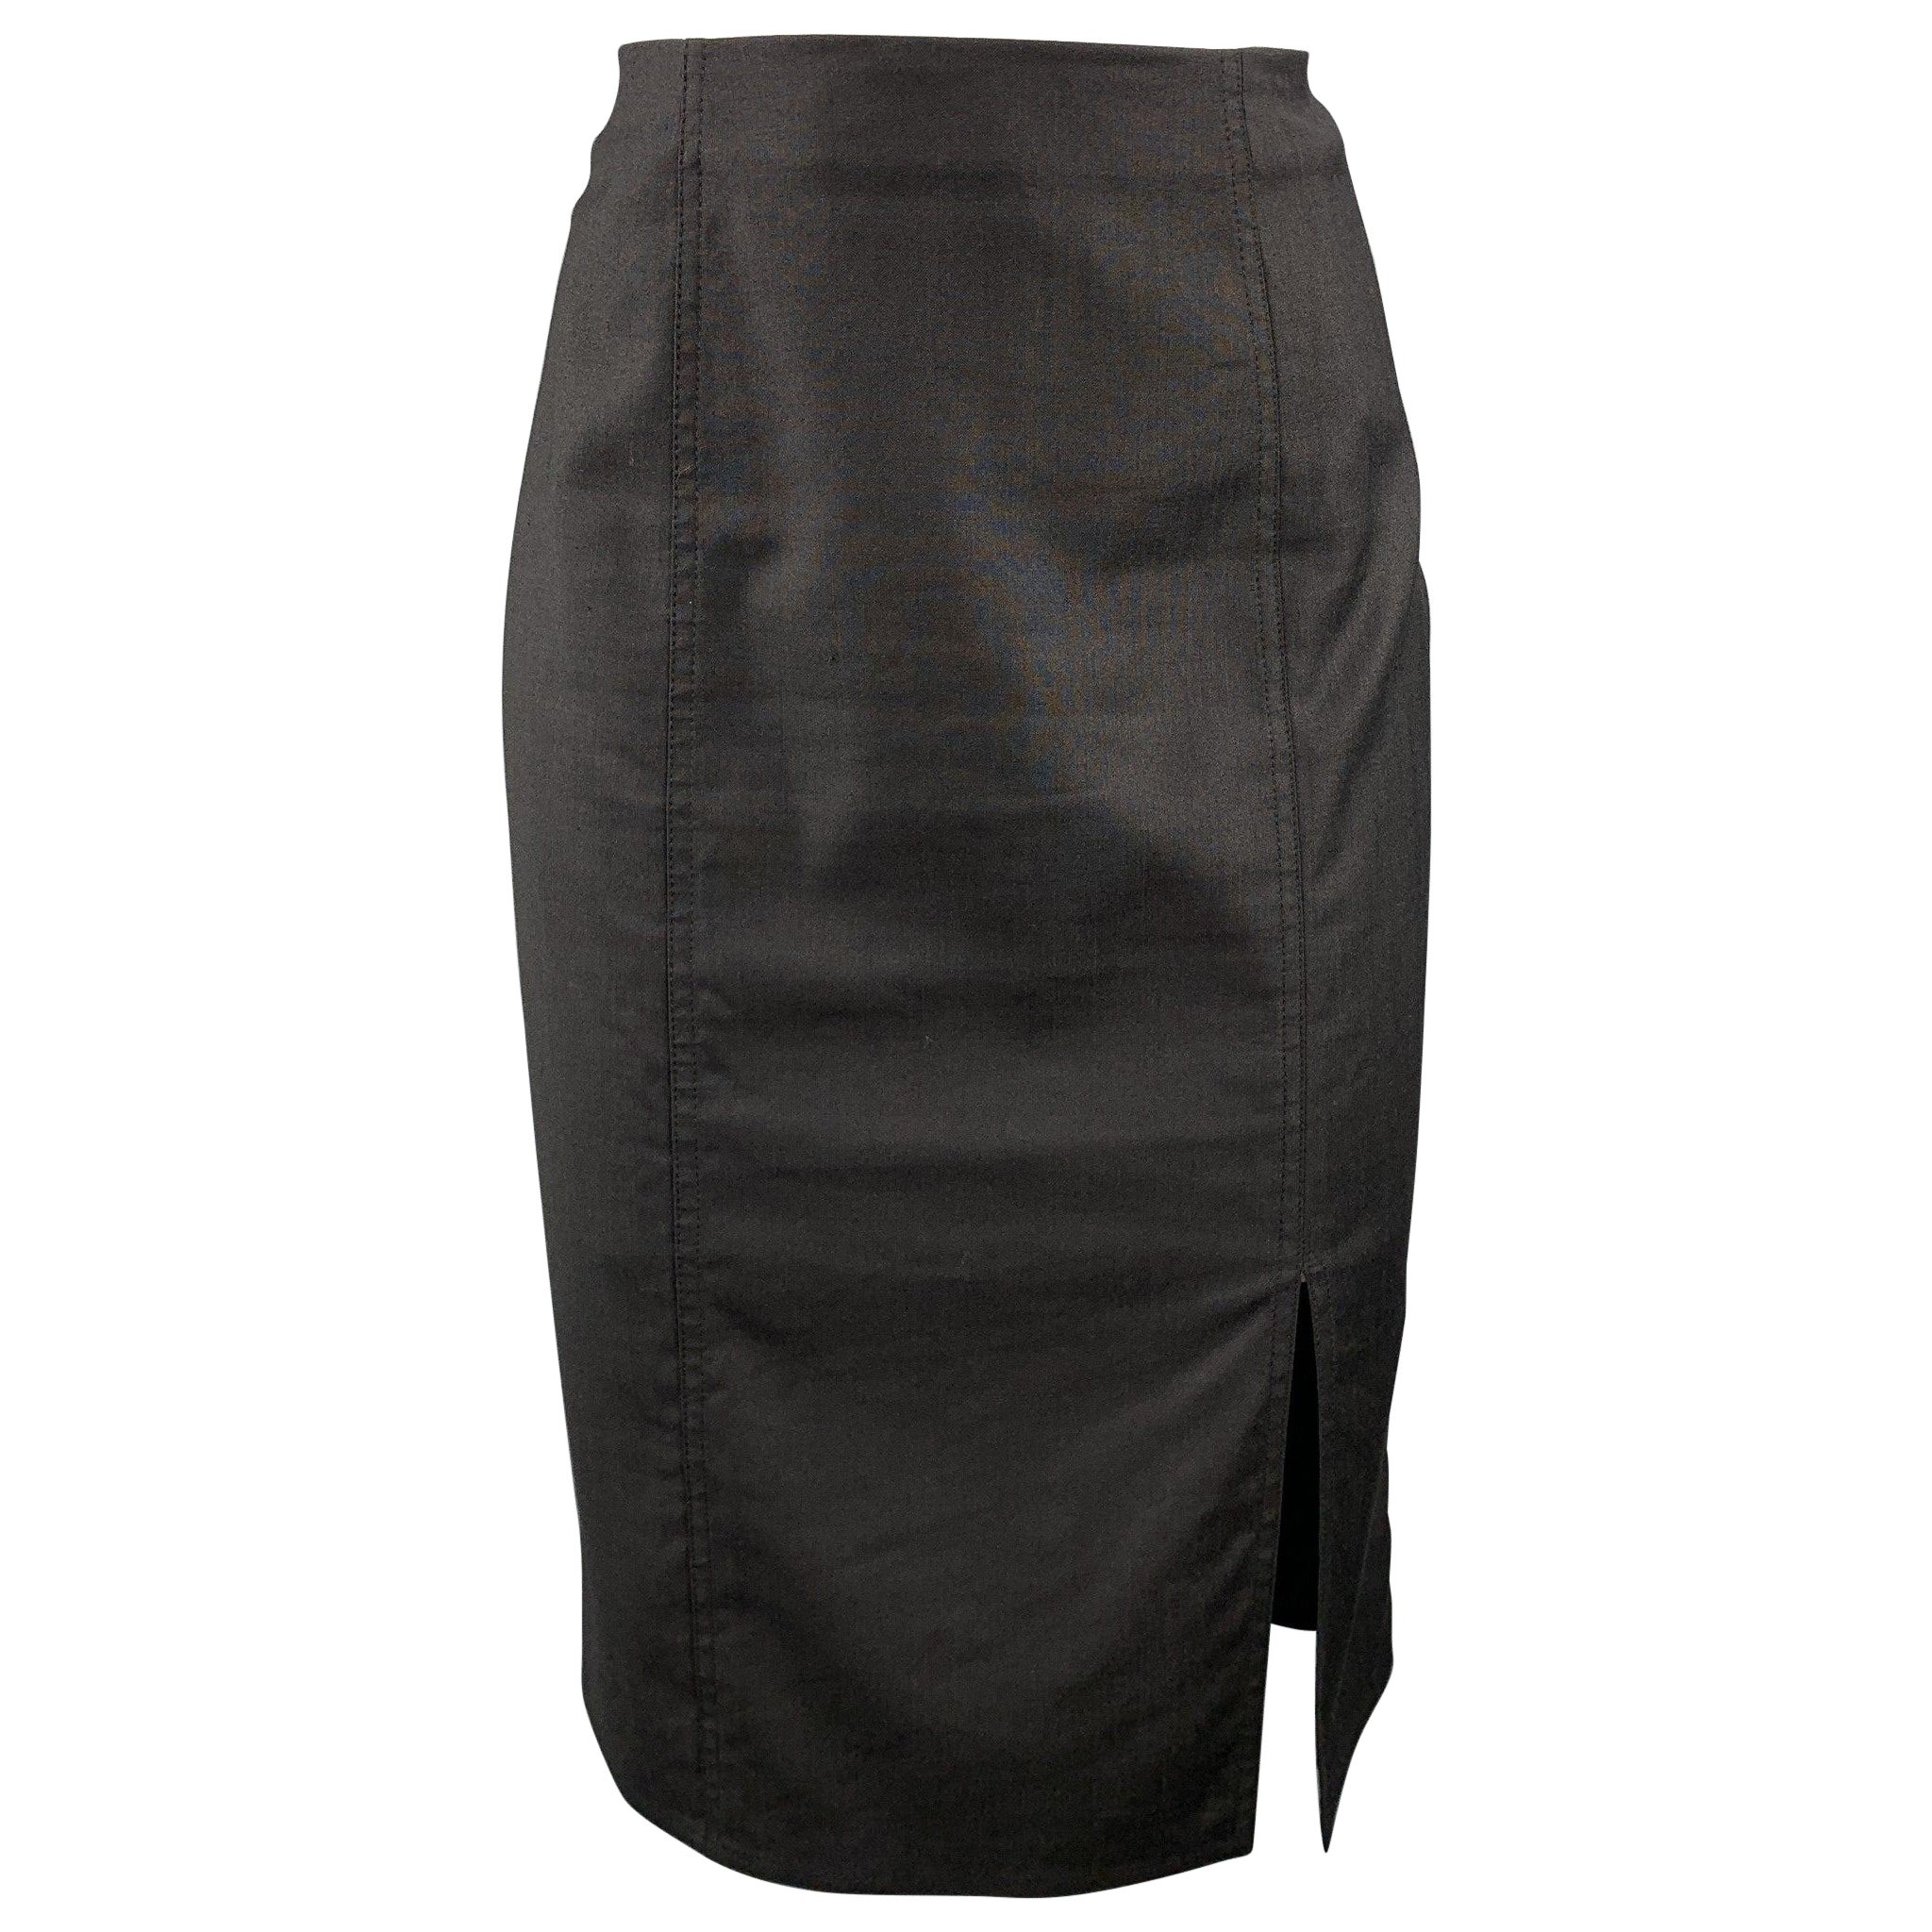 CHRISTIAN DIOR BOUTIQUE Size 6 Black Viscose Blend Pencil Skirt For Sale